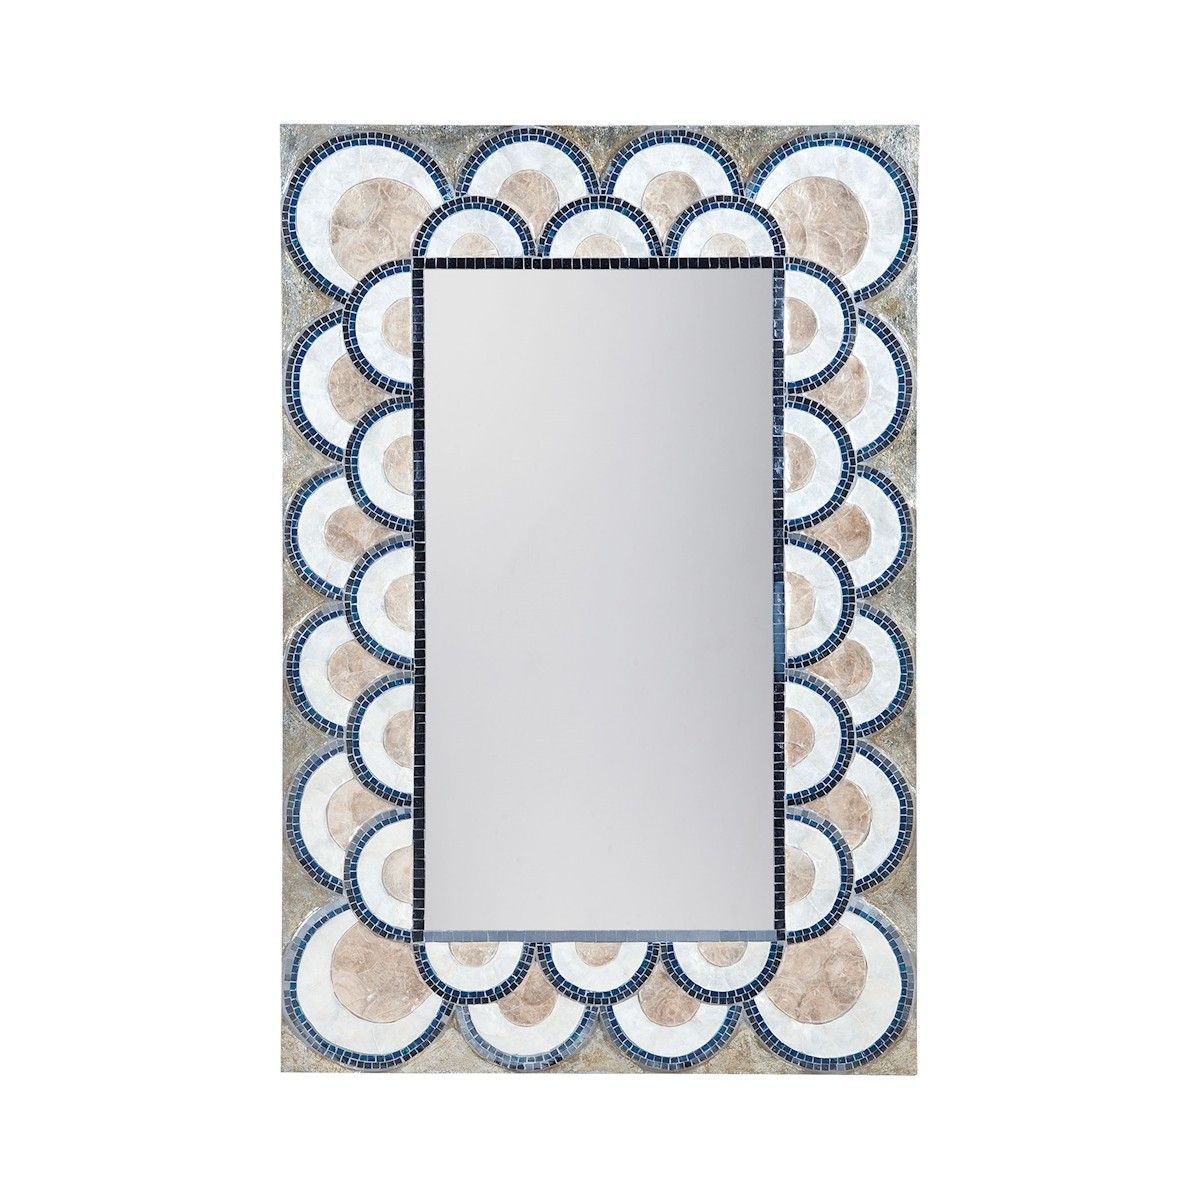 Dimond Home 7163 071 Art Deco Capiz Shell And Glass Mosaic Mirror Regarding Shell Mosaic Wall Mirrors (View 10 of 15)